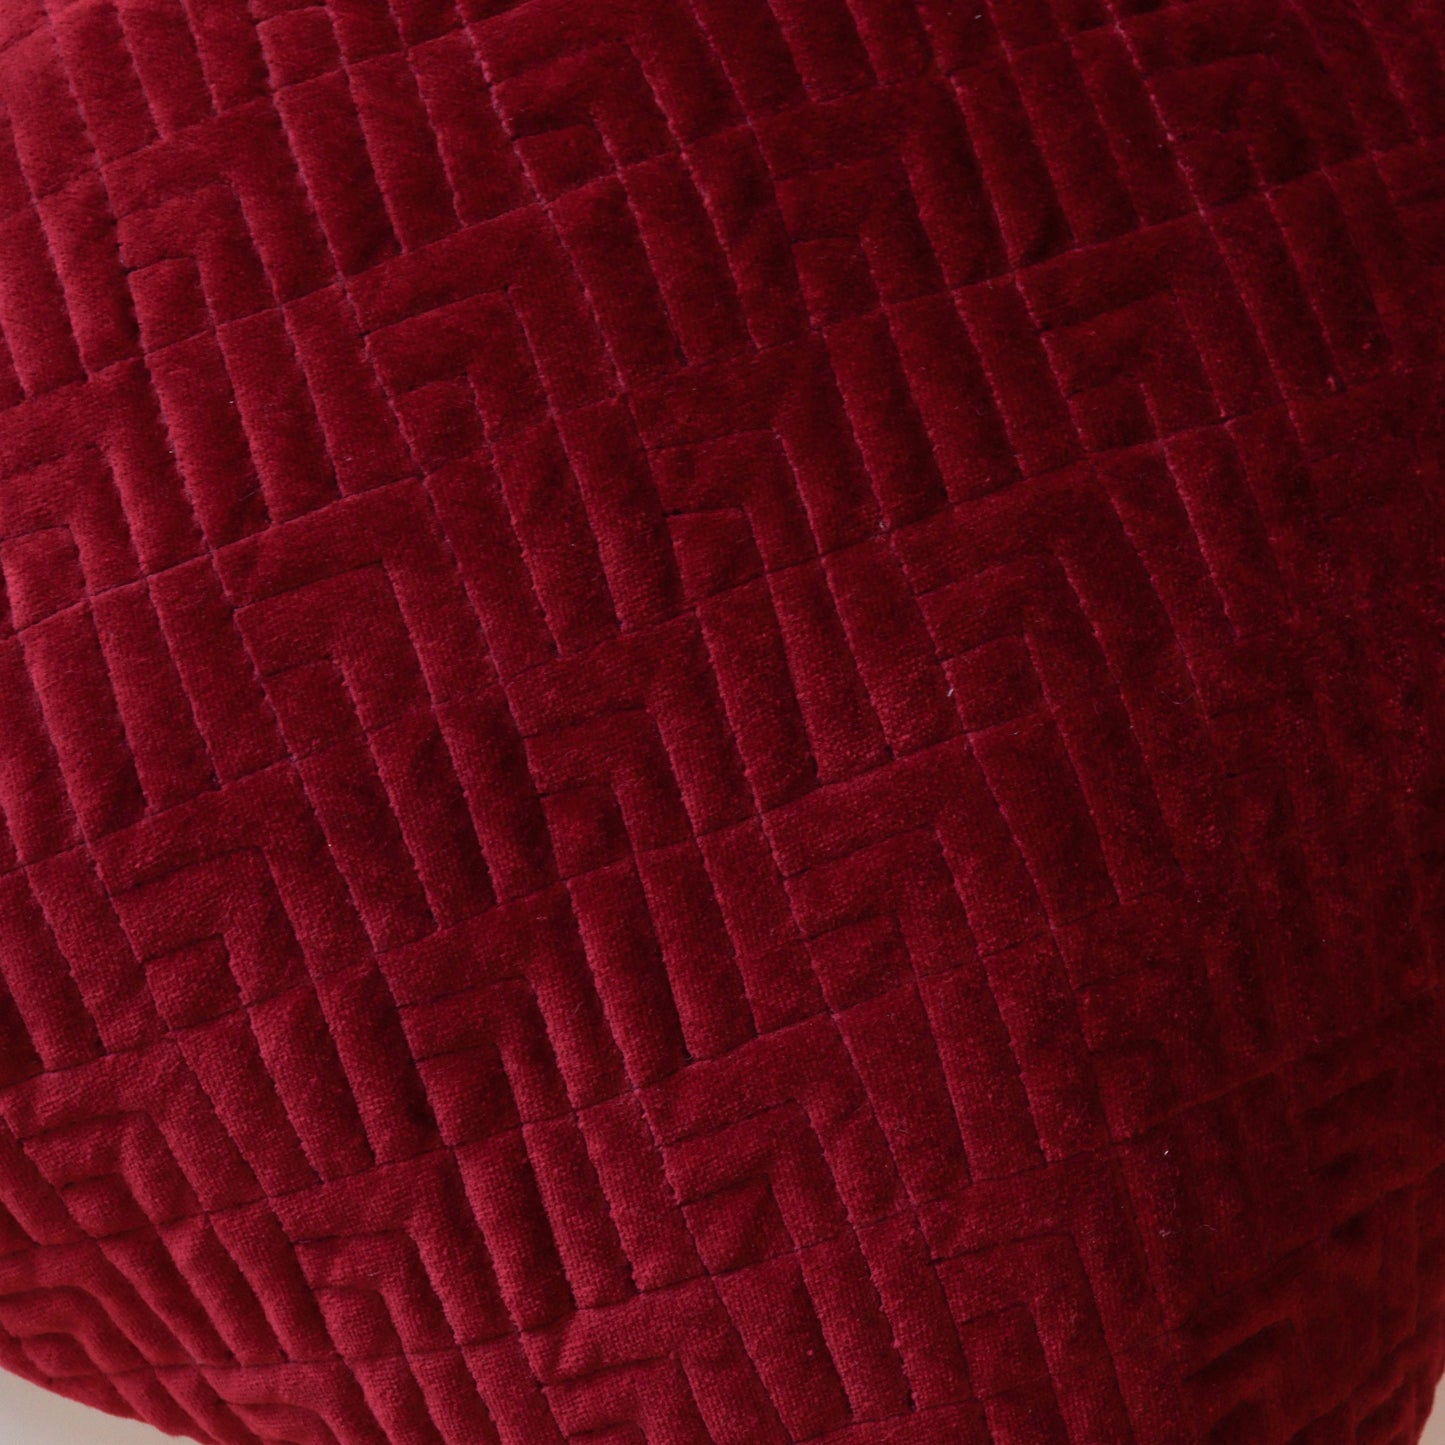 Velvet Quilted Pattern Cushion